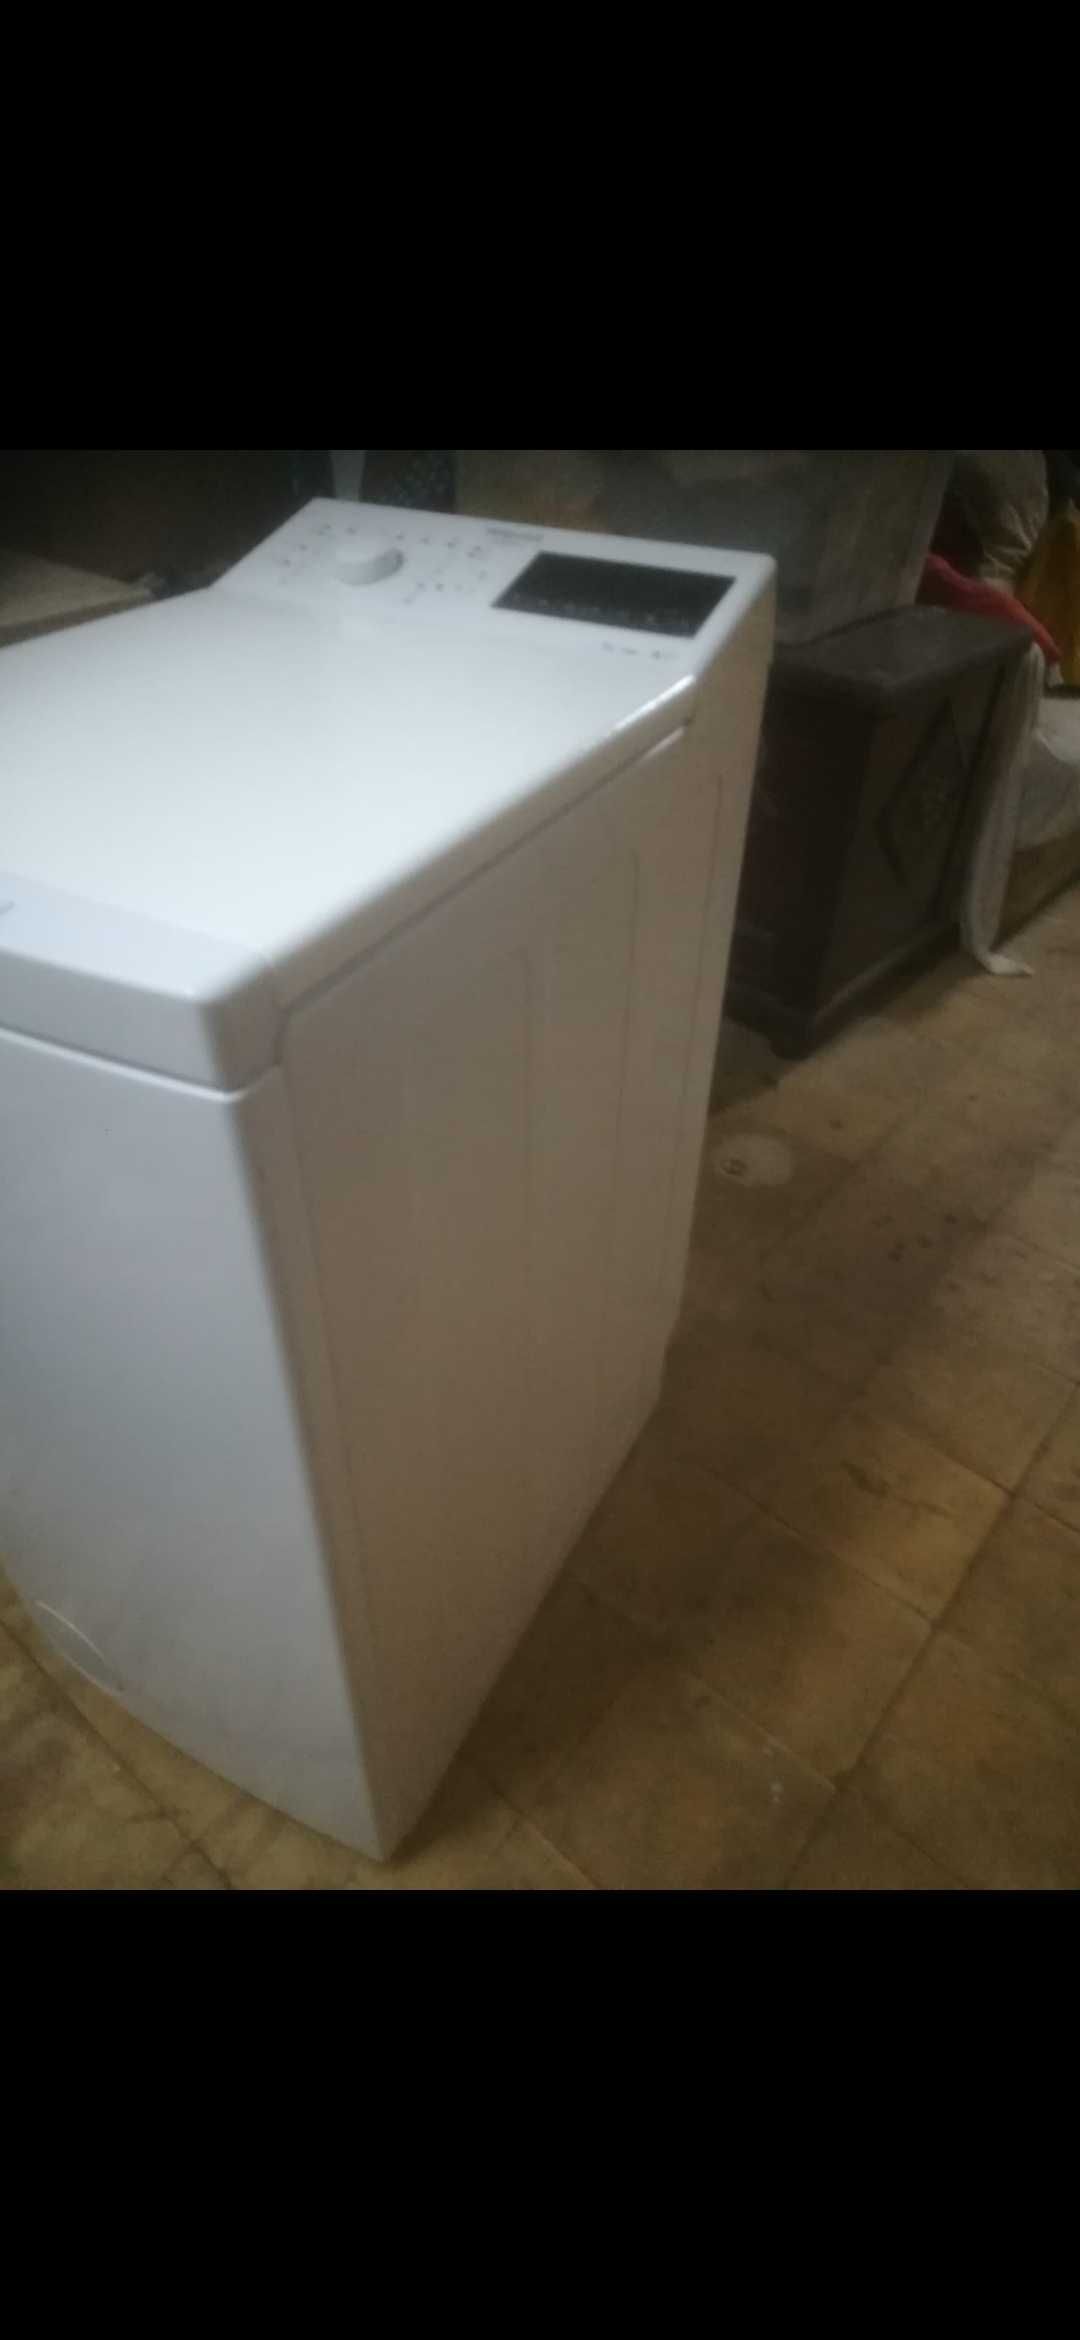 Máquina de lavar roupa Hotpoint 7Kg